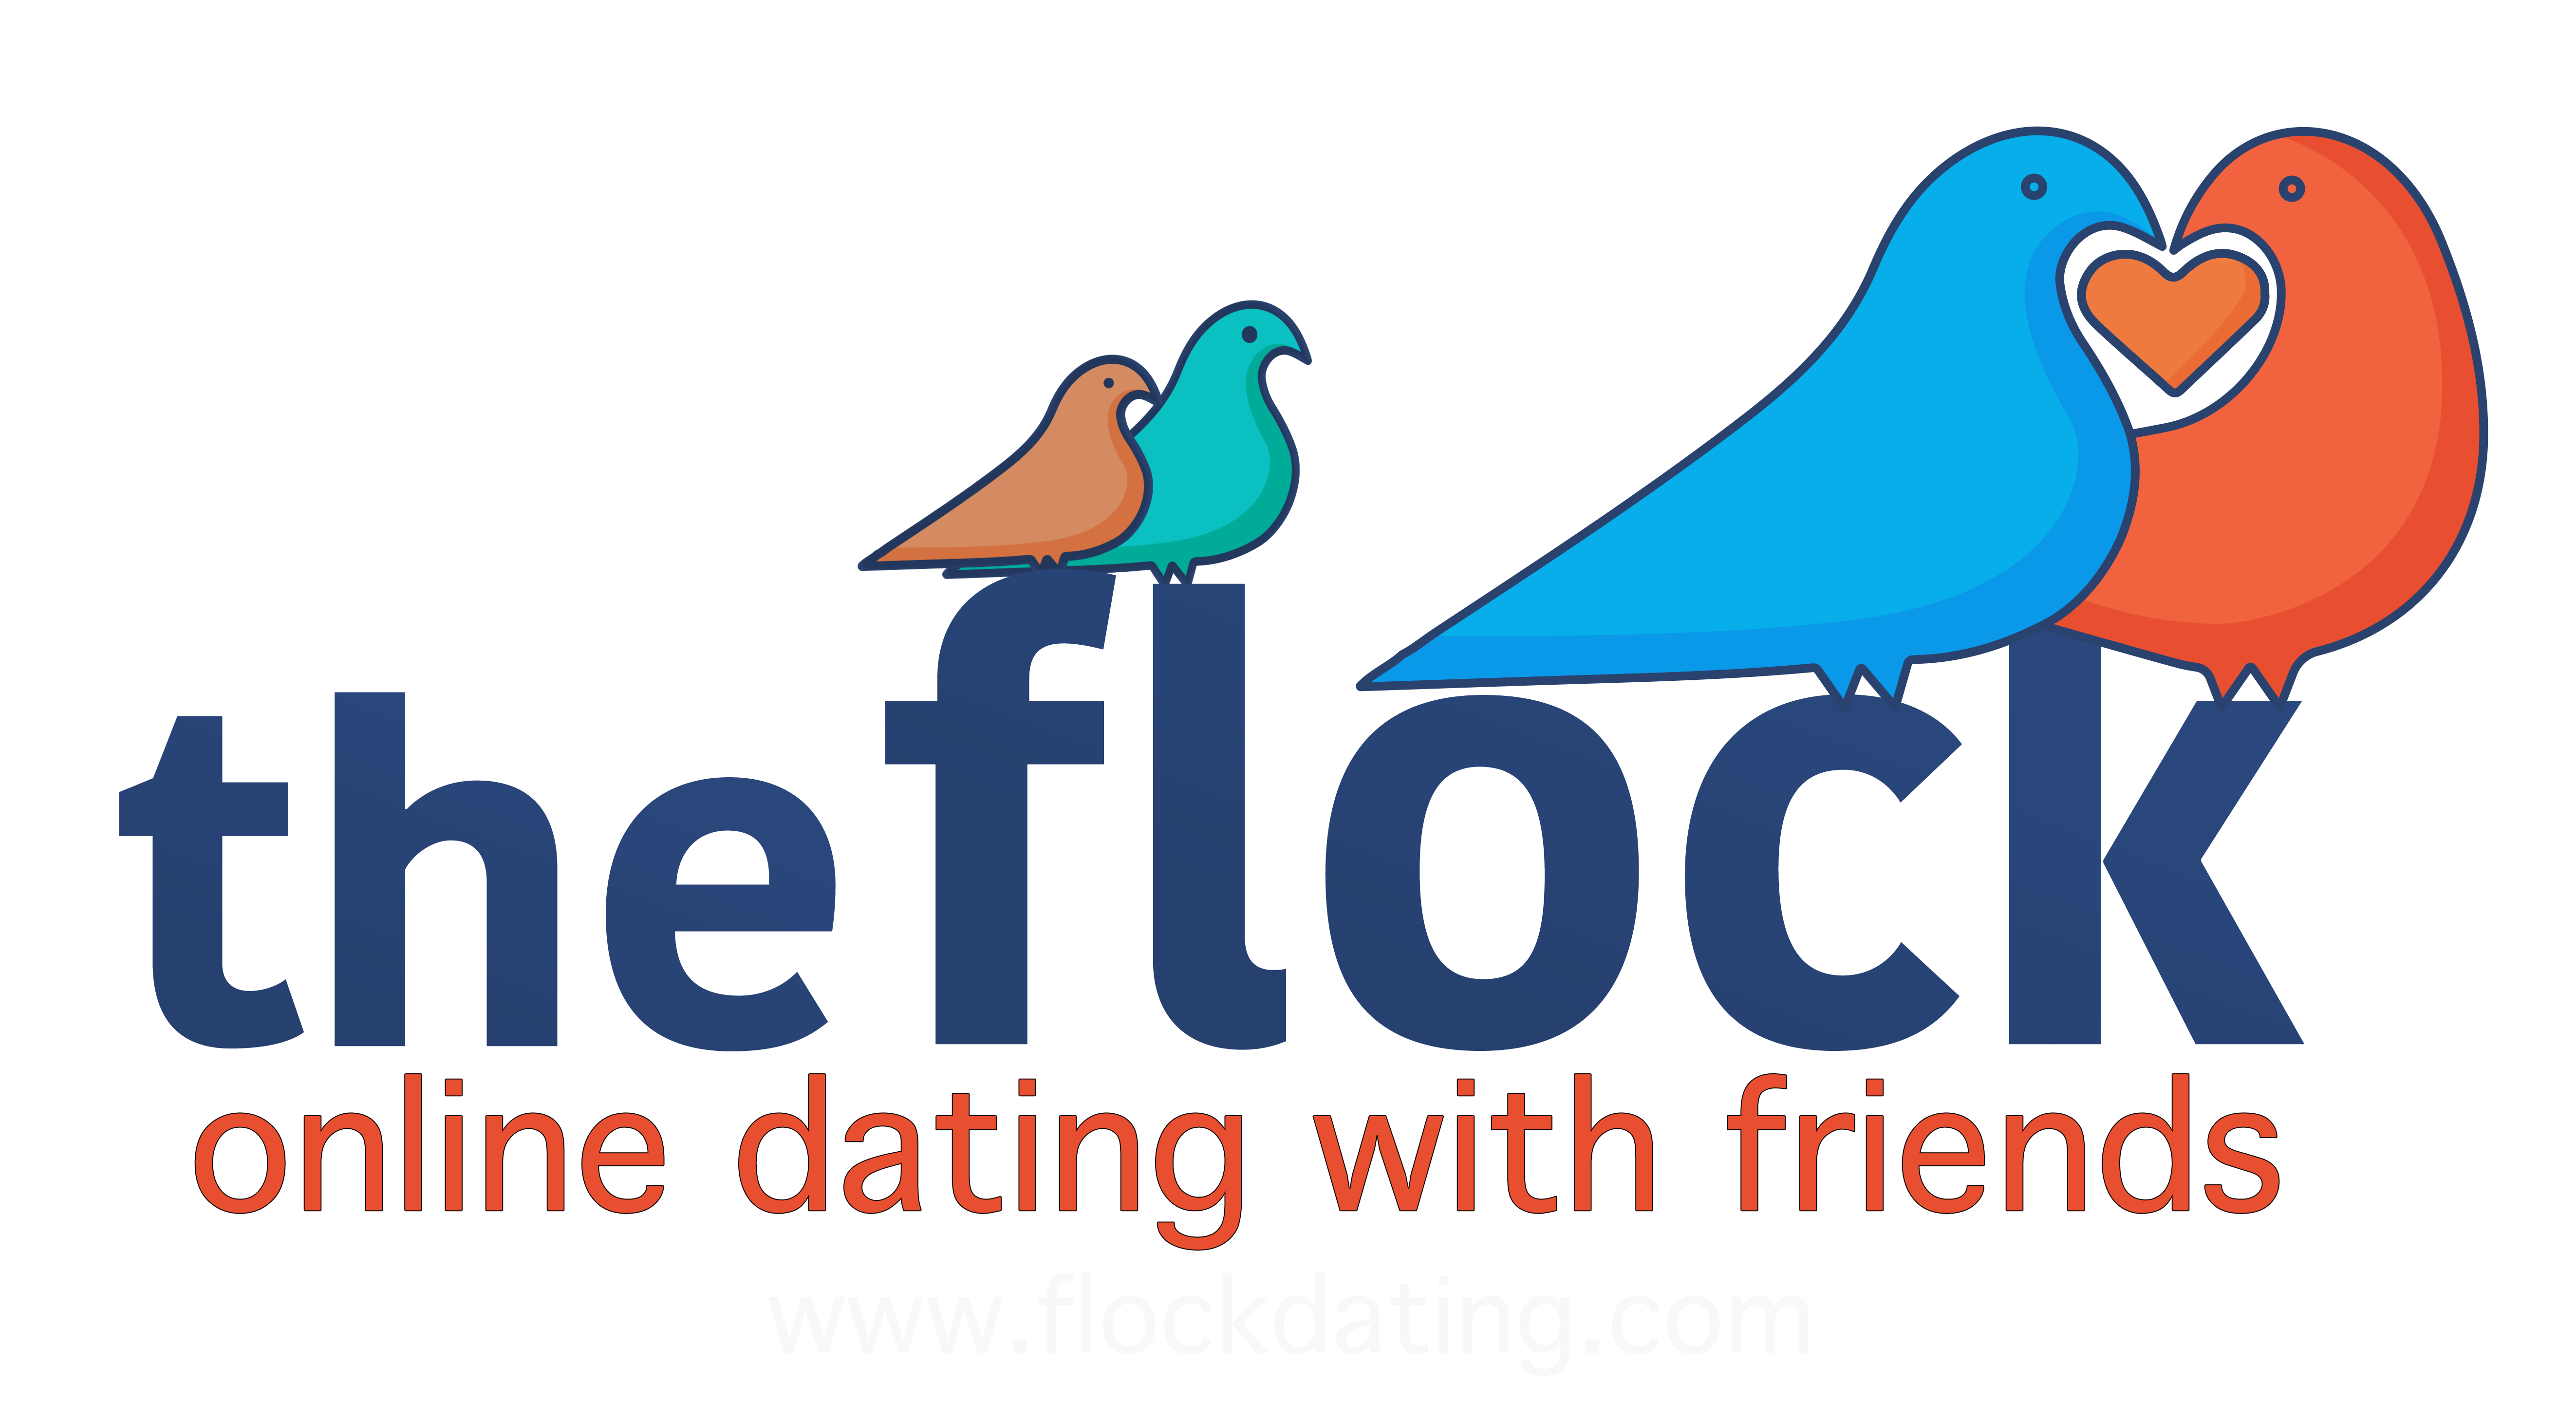 FLock.io - Crunchbase Company Profile & Funding